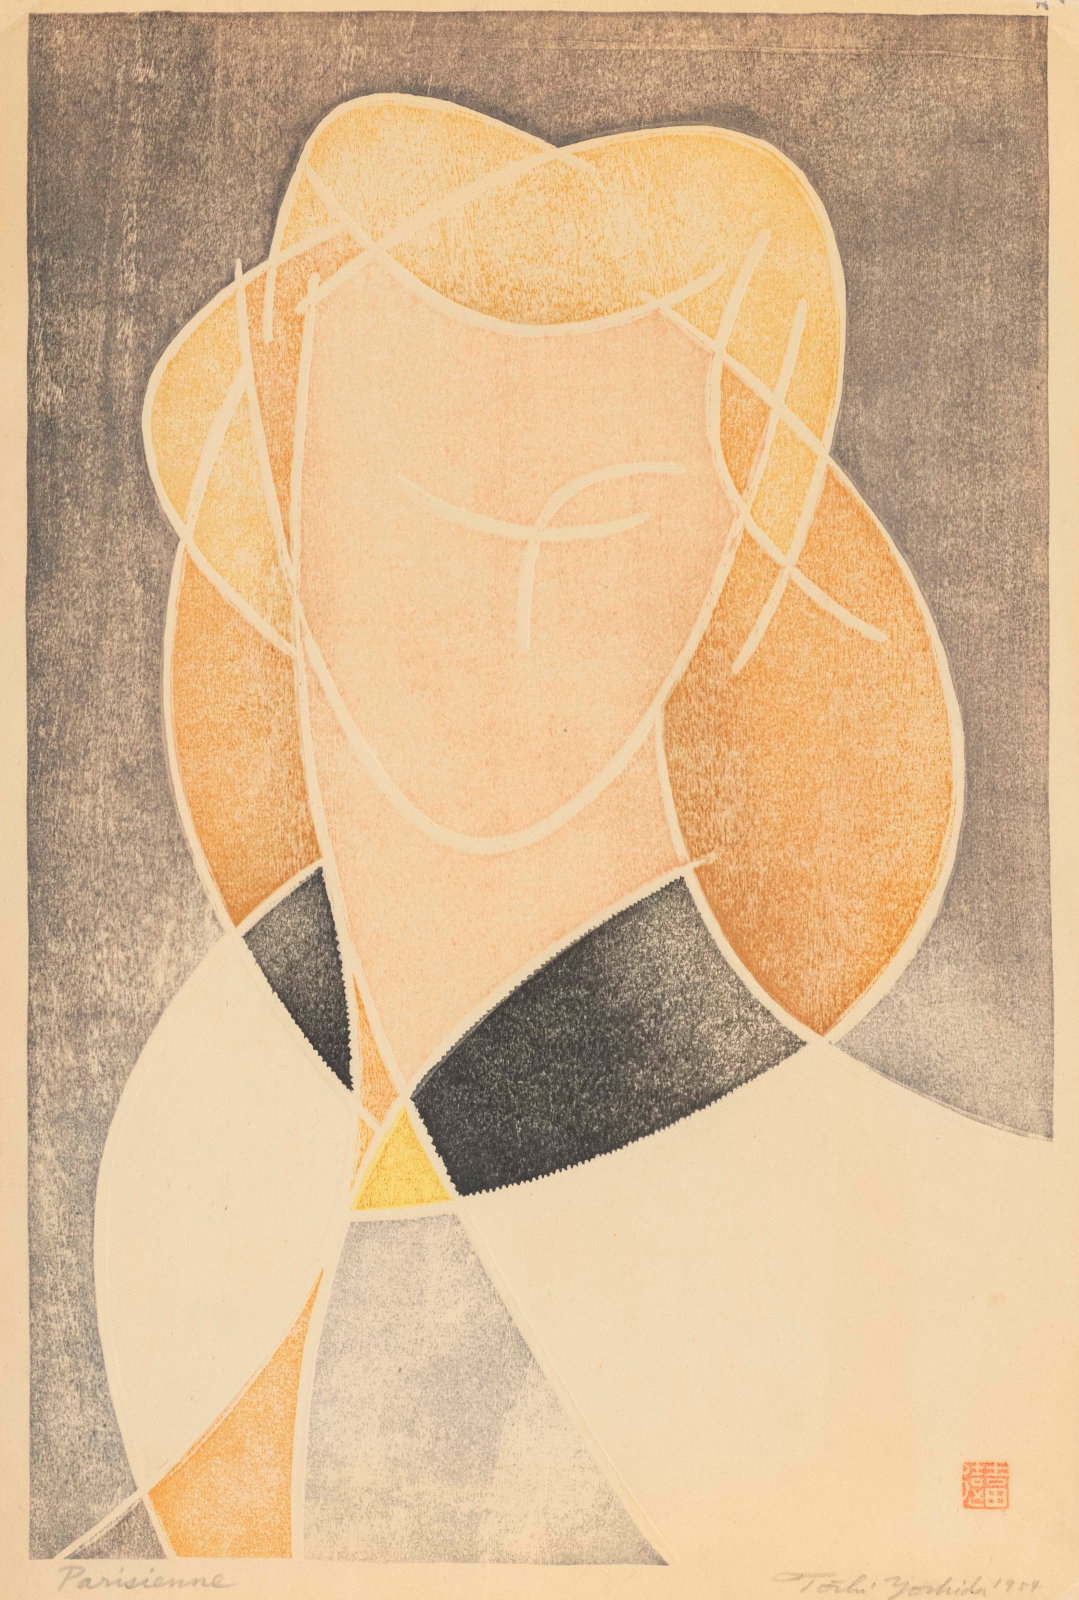 Toshi Yoshida “Parisienne” 1954 woodblock print